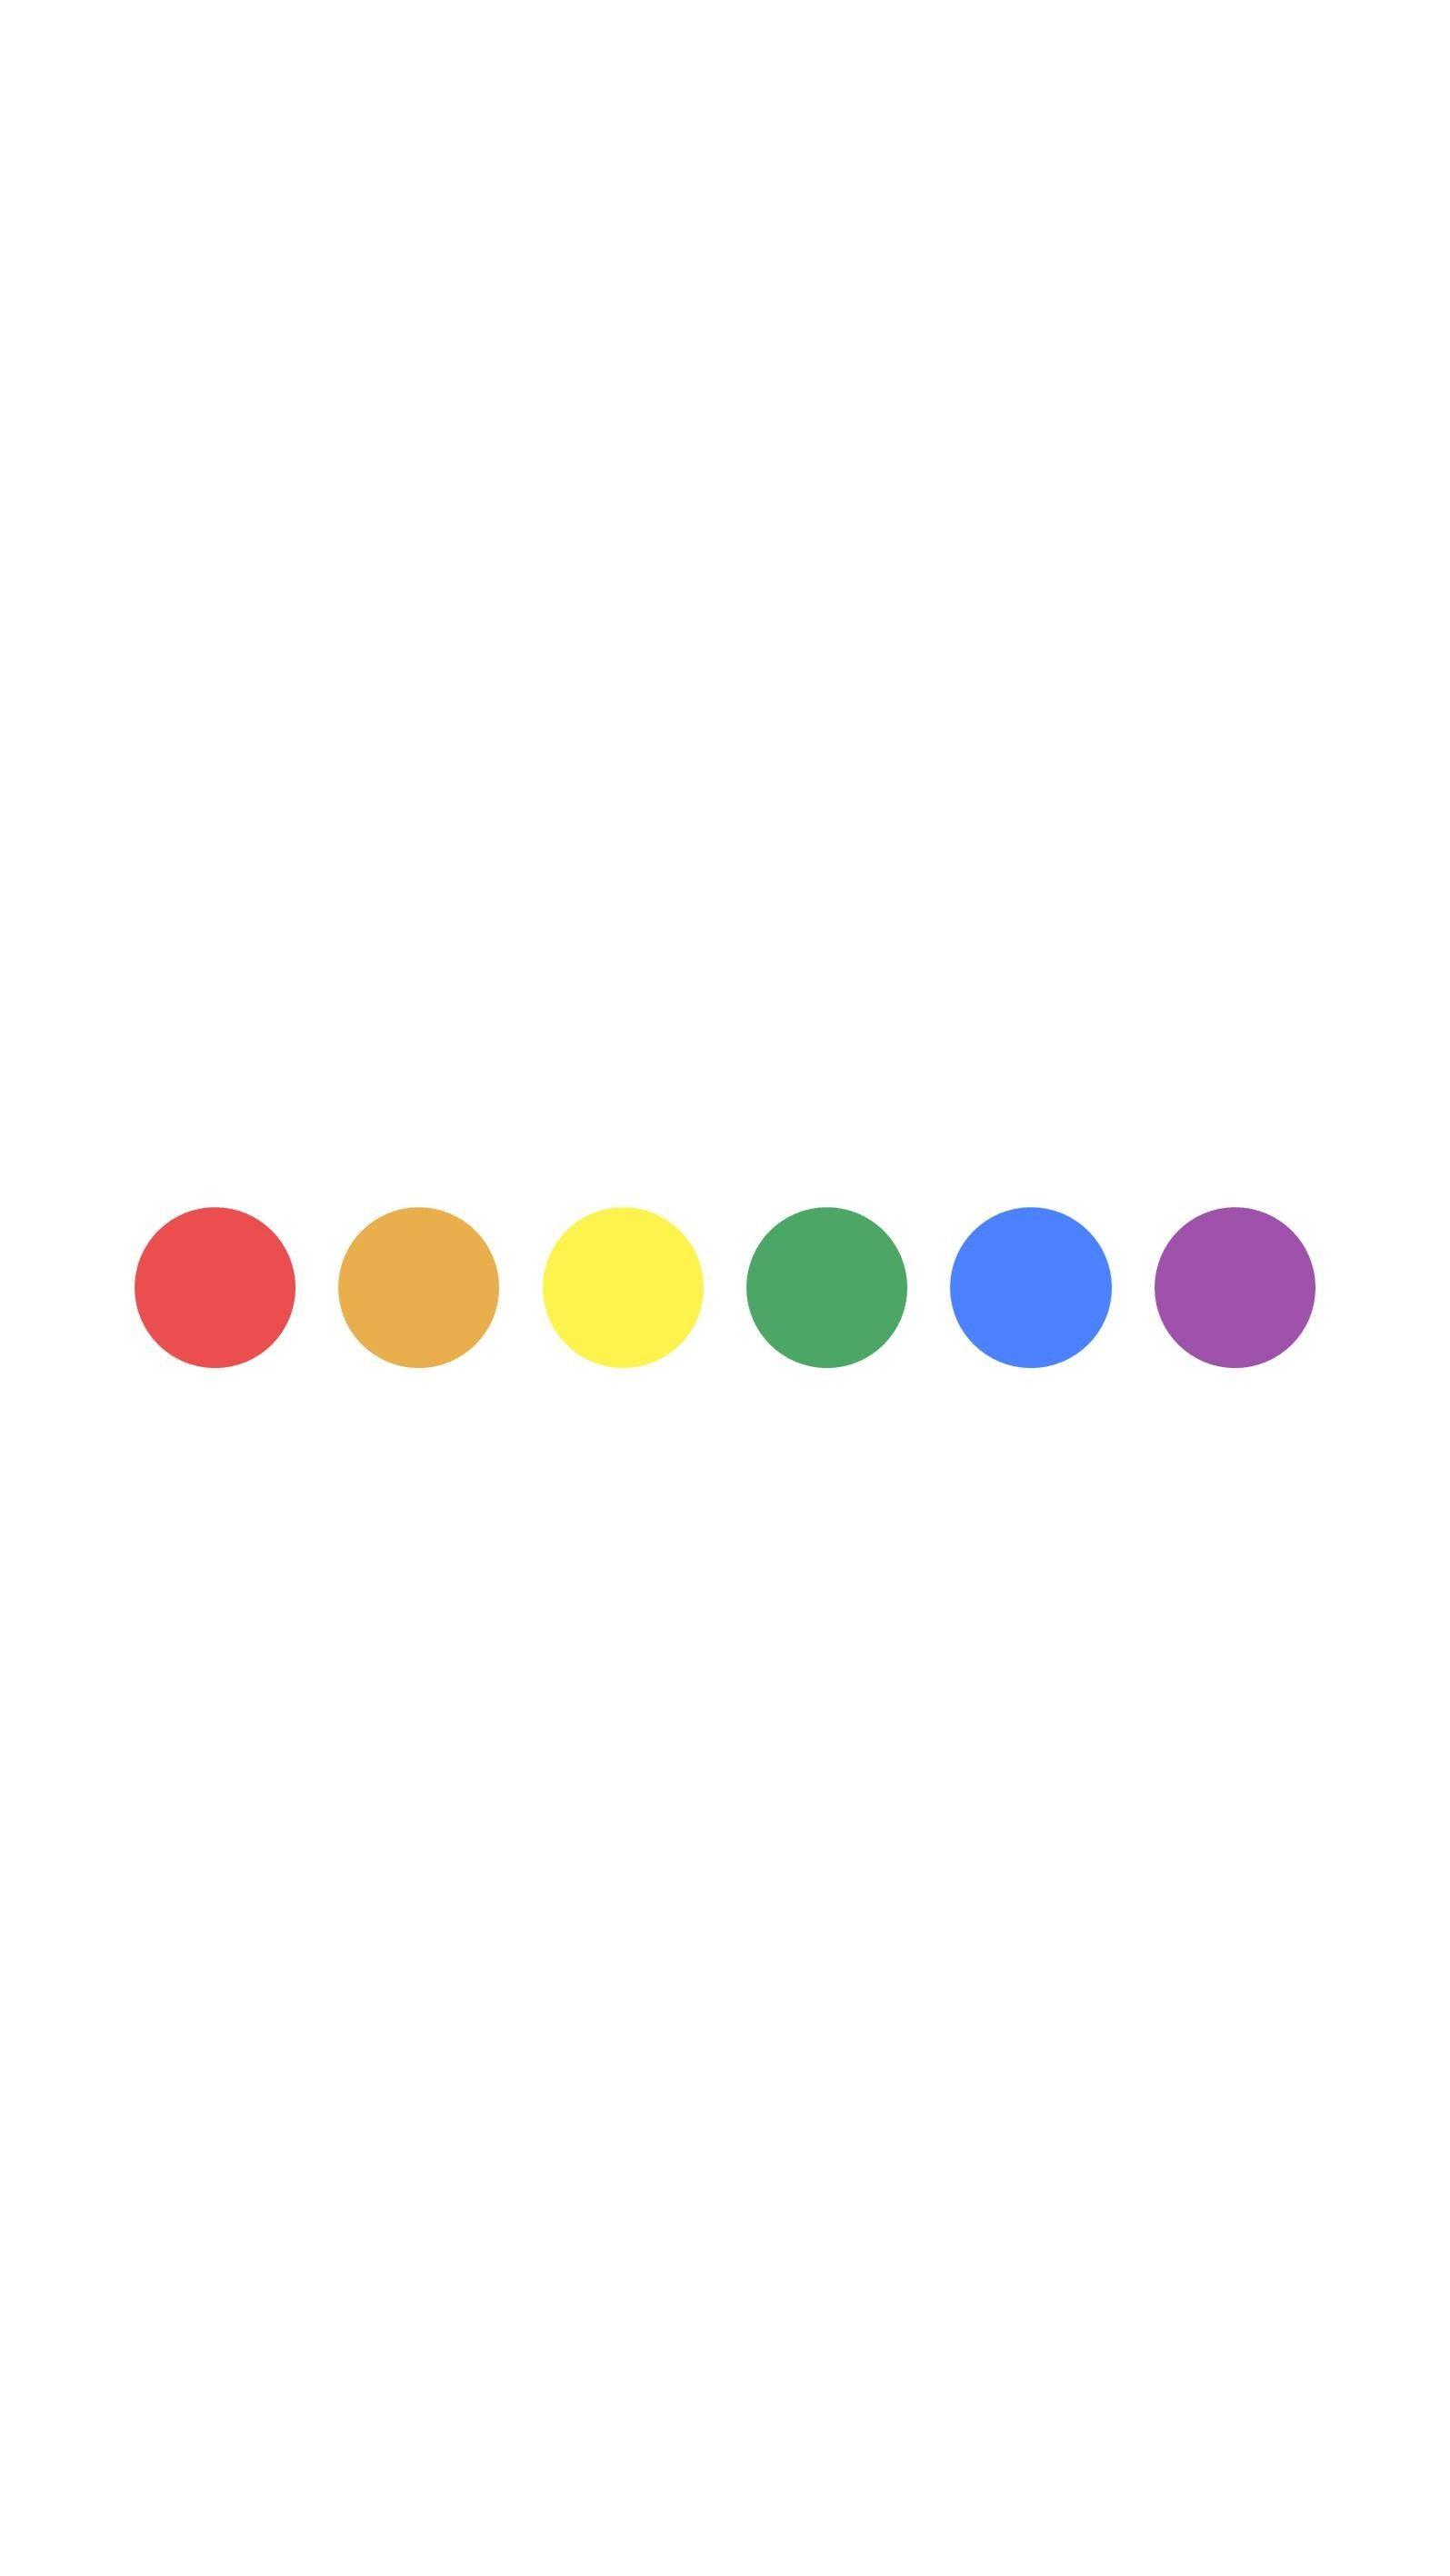 Rainbow Aesthetic Wallpaper - LGBT Aesthetic Pride Wallpaper for Phone